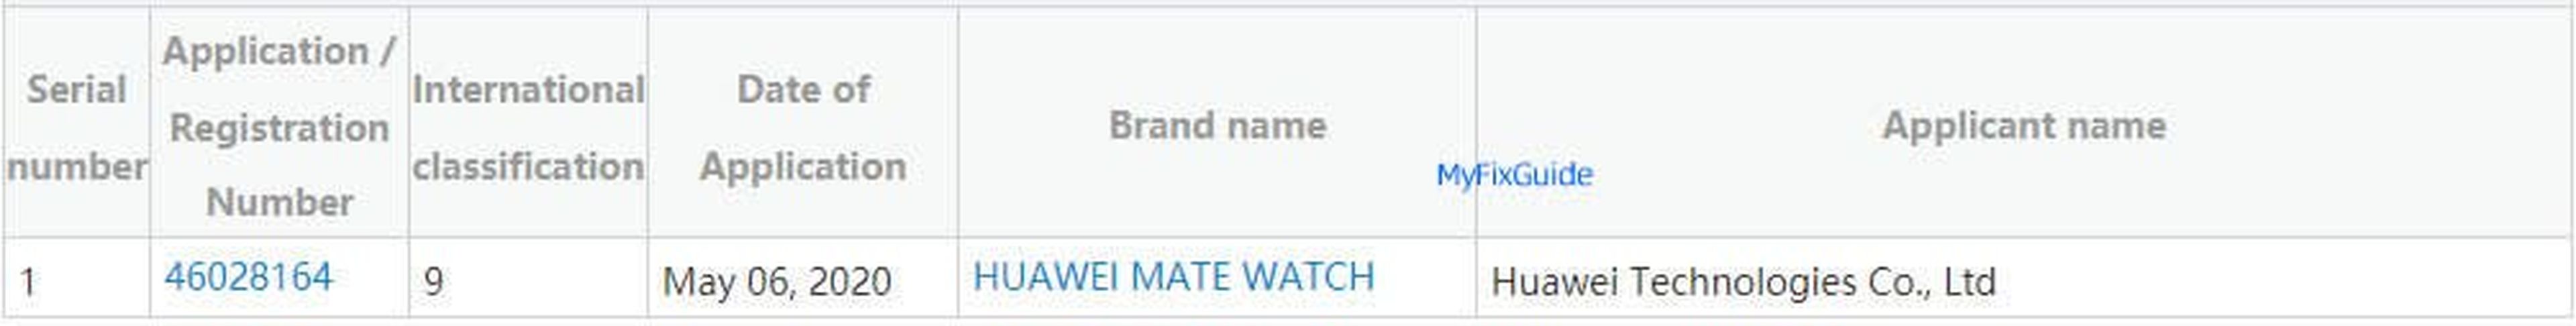 Registro Huawei Mate Watch